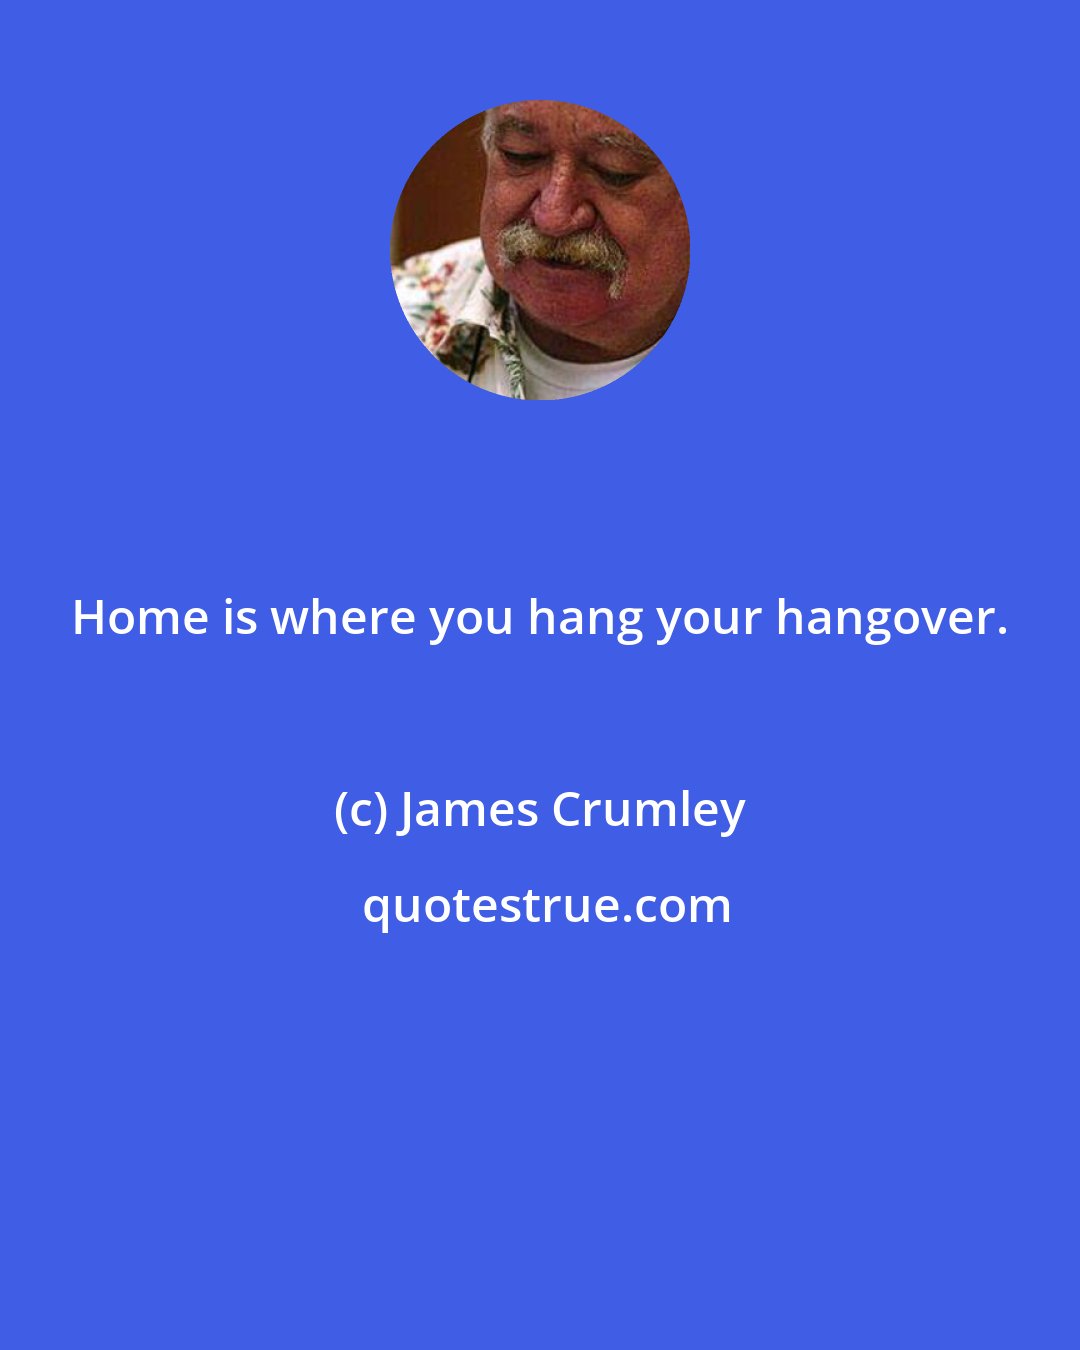 James Crumley: Home is where you hang your hangover.